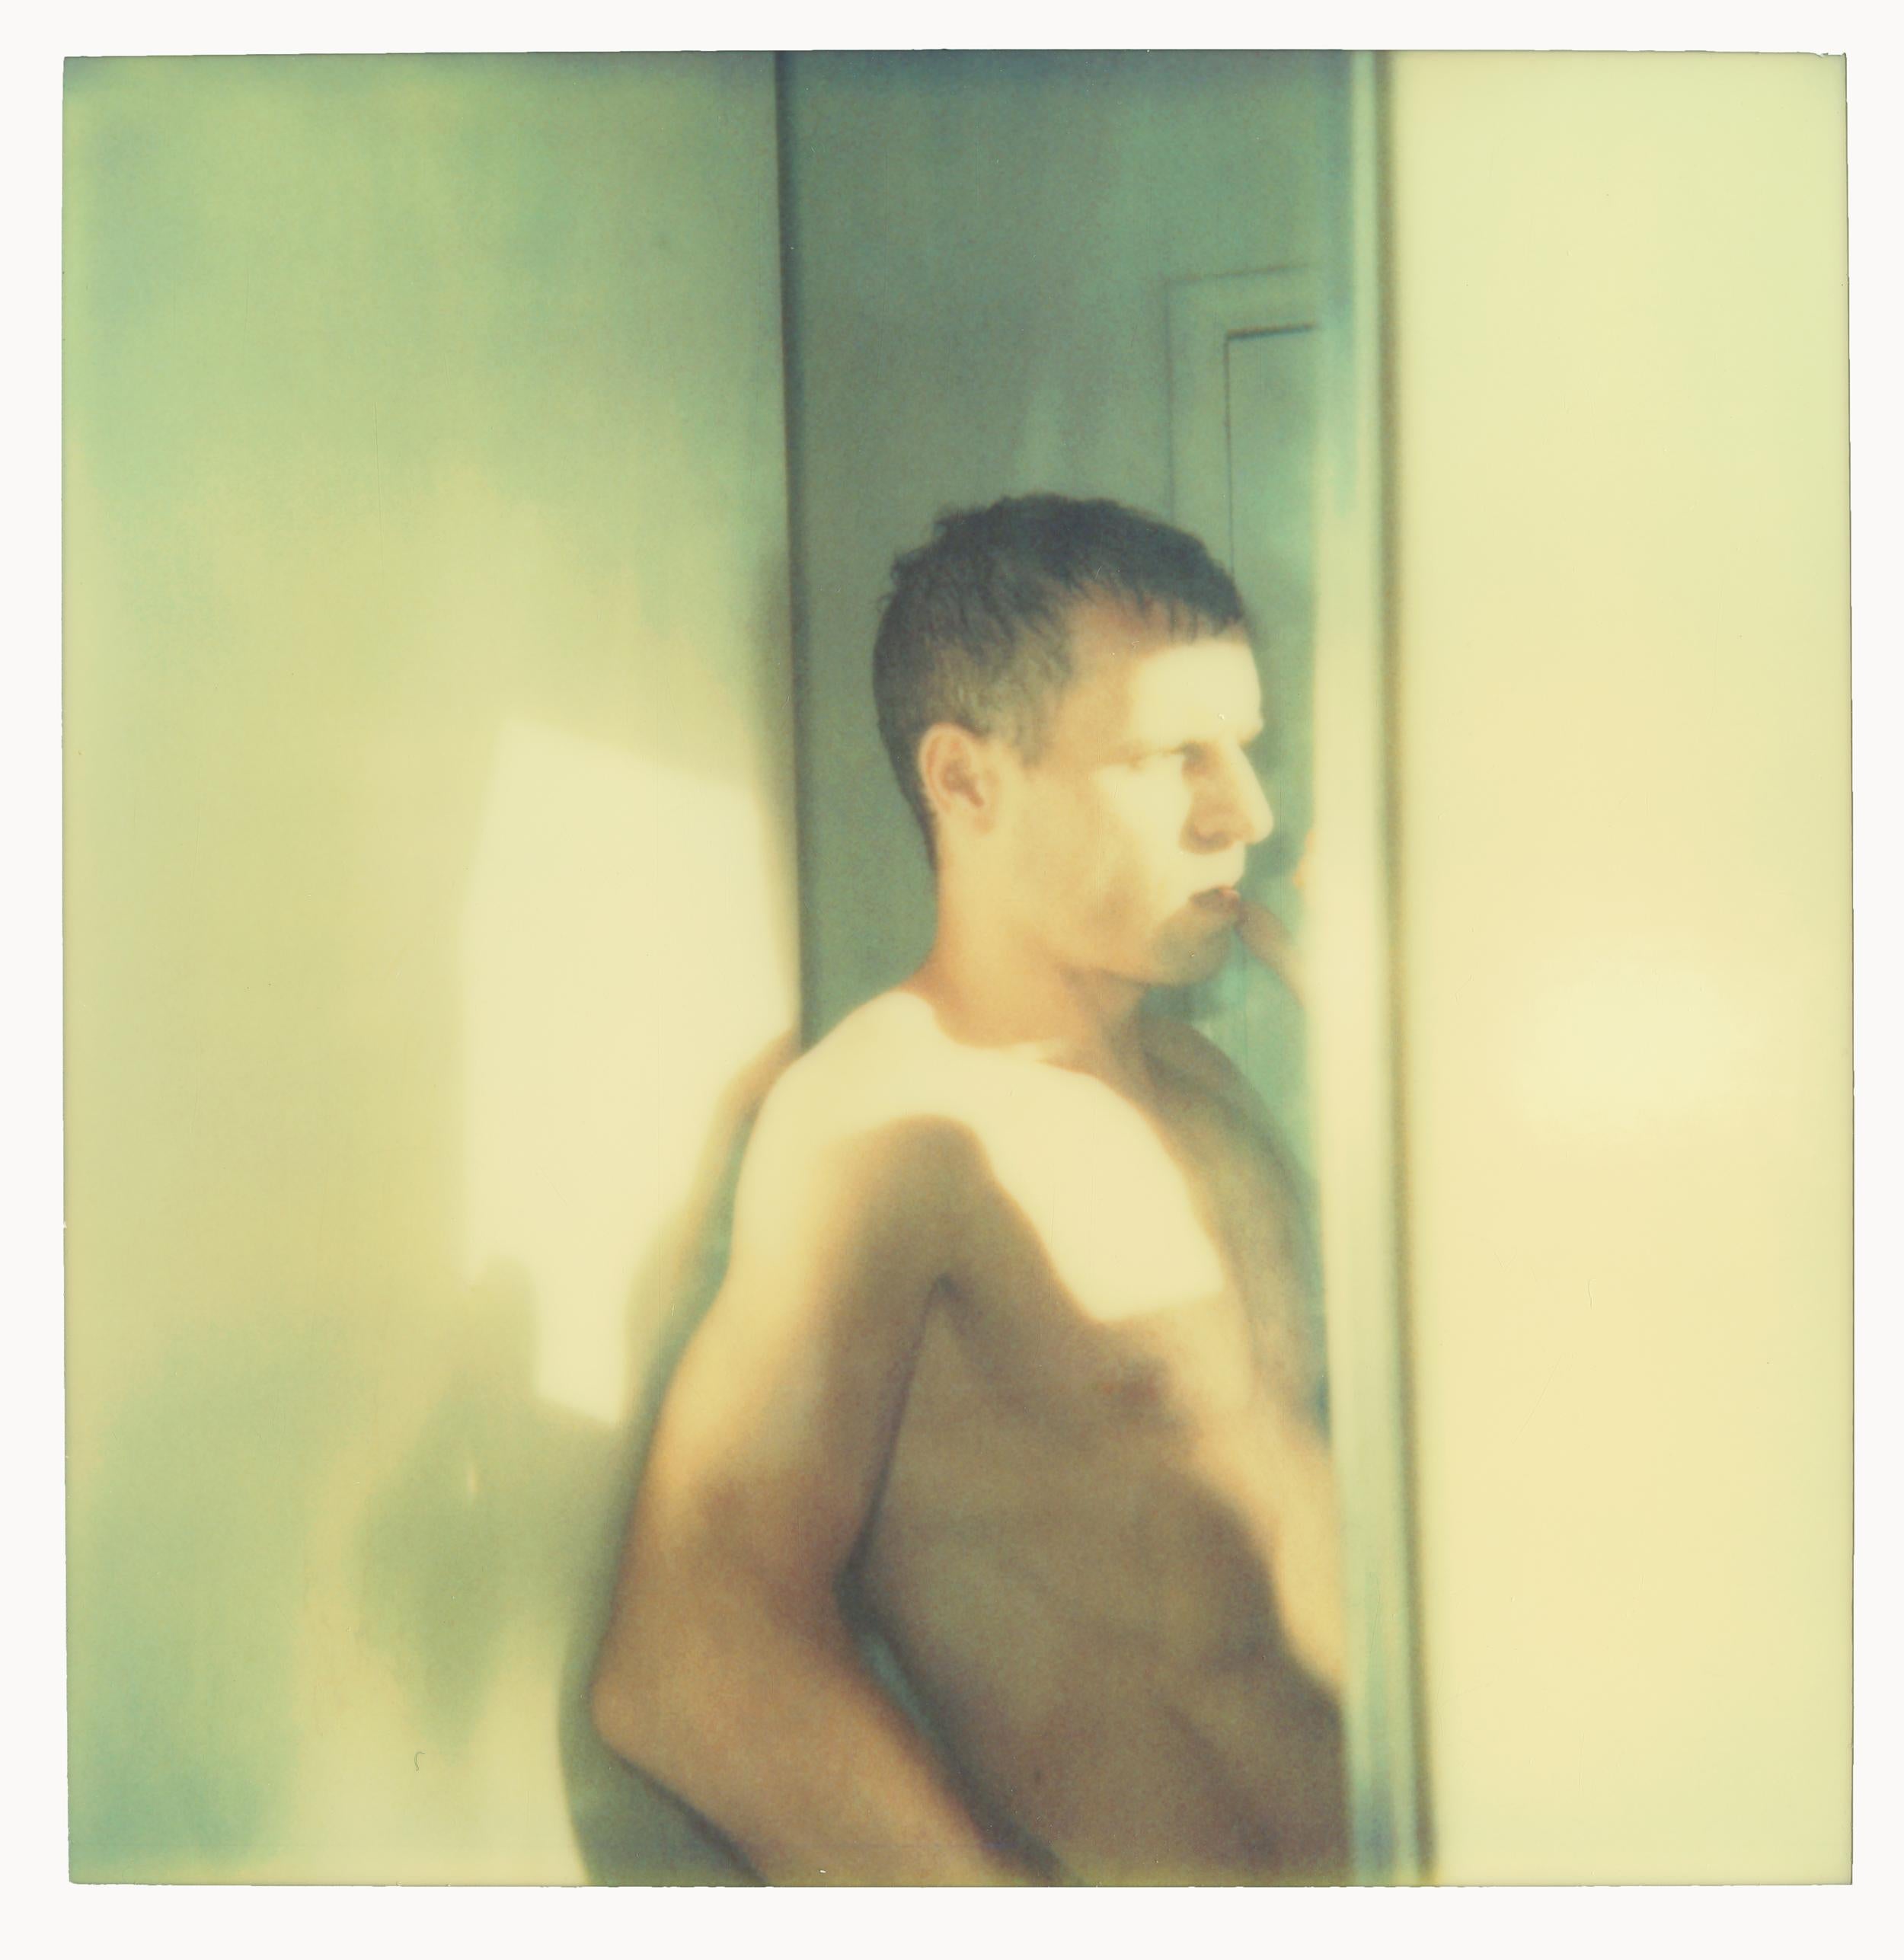 Stefanie Schneider Nude Photograph - Male Nude VI (29 Palms, CA) - 20x20cm